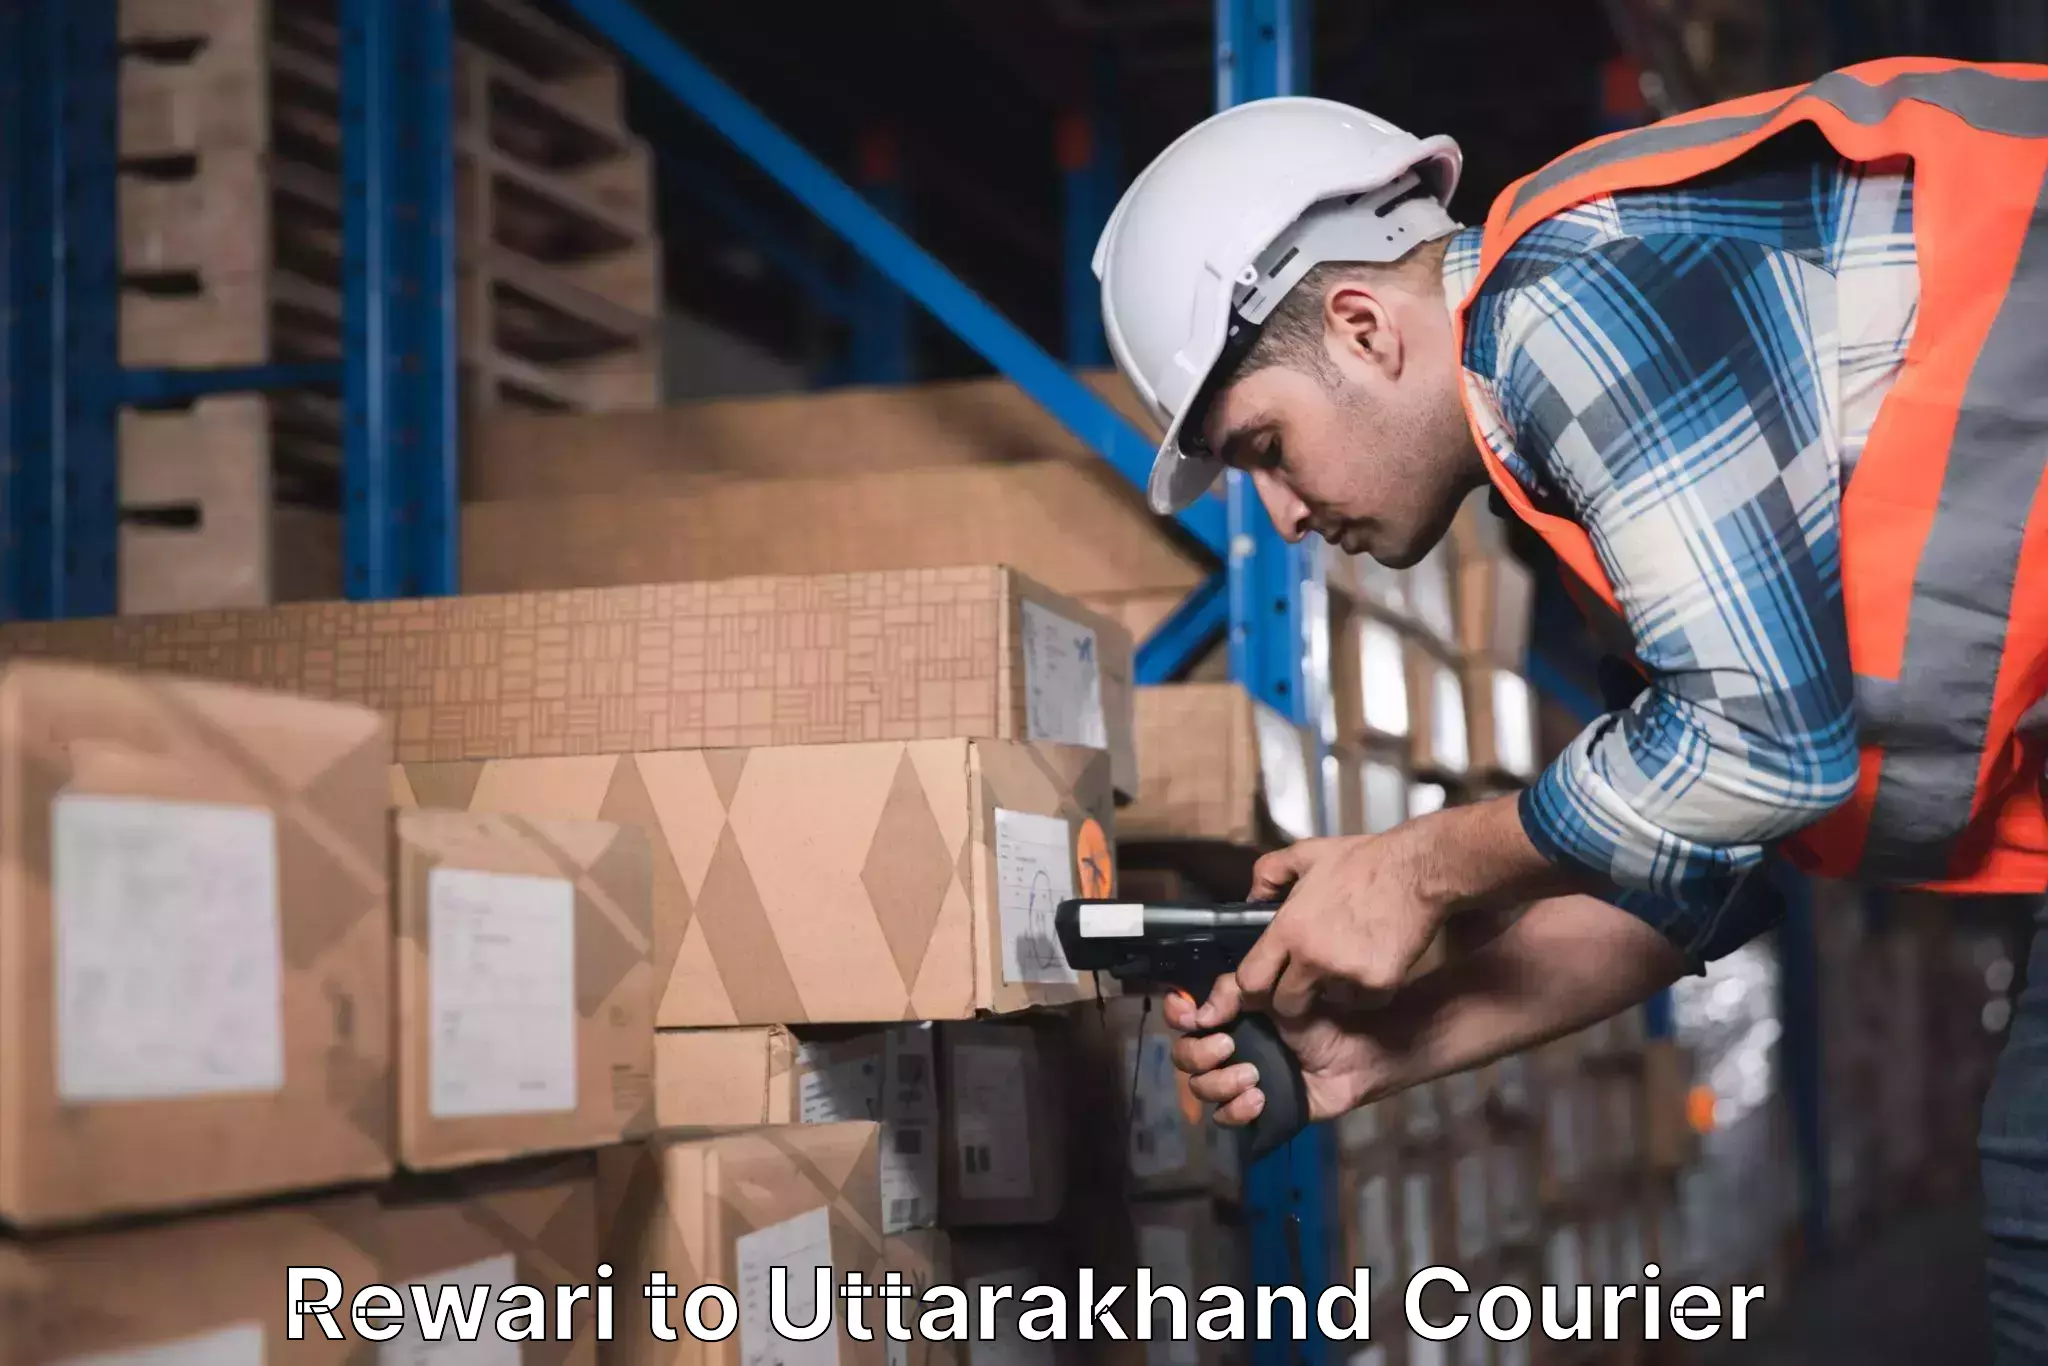 Quality courier partnerships Rewari to Rudrapur